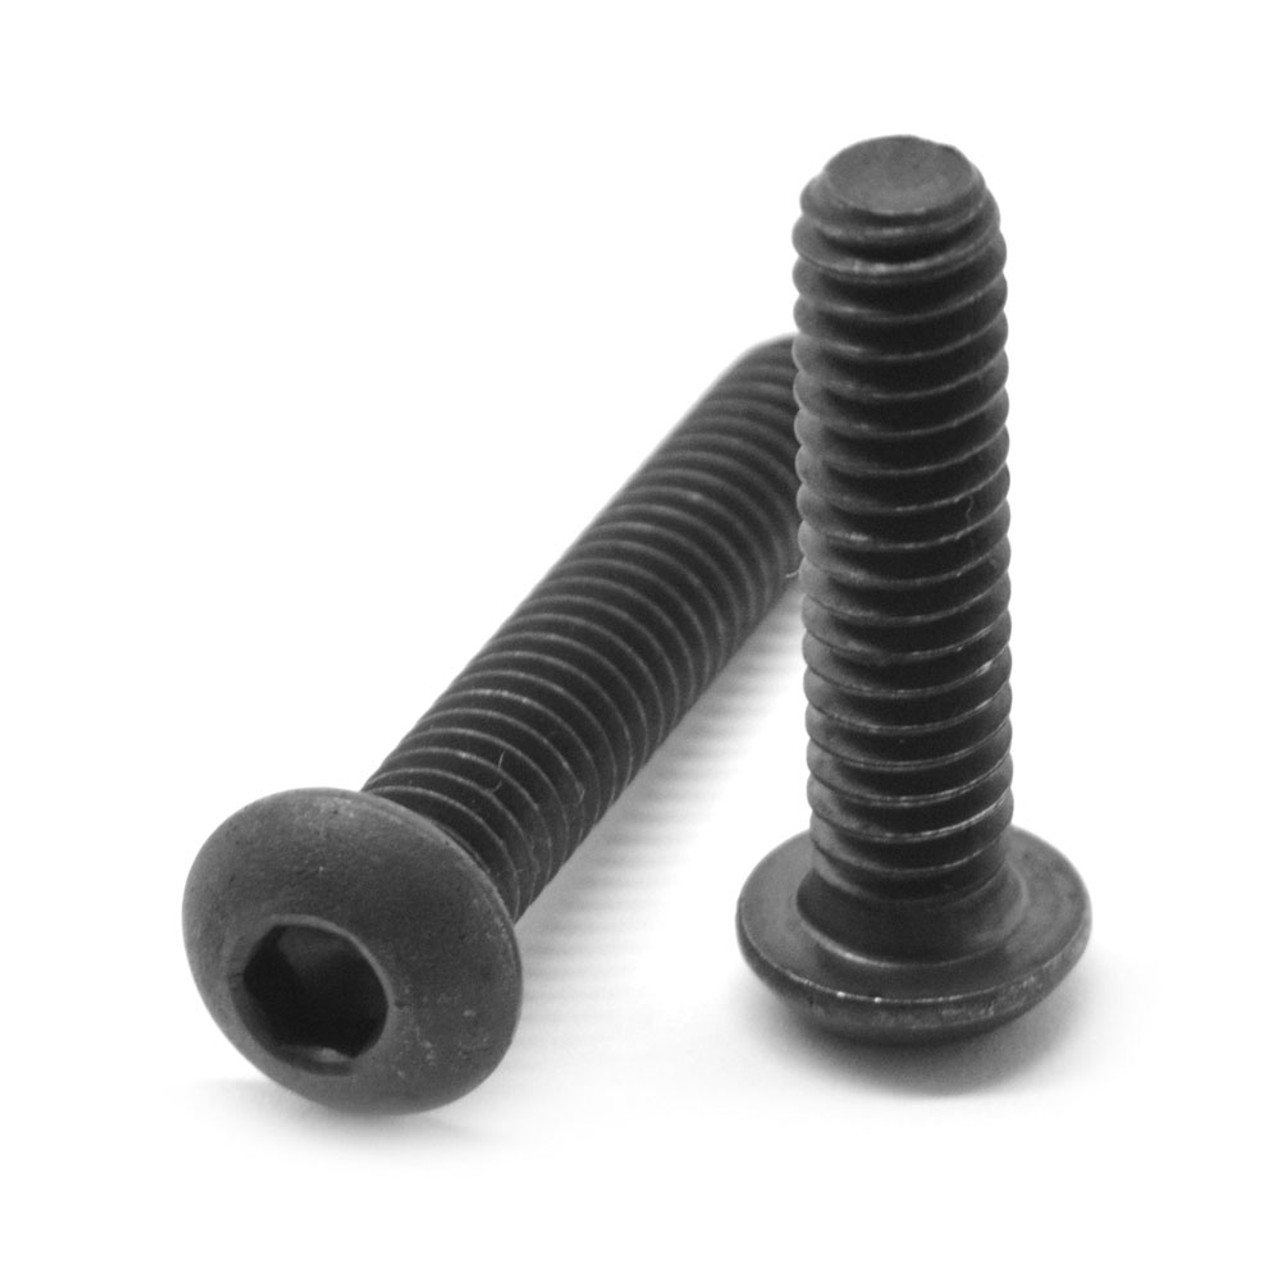 M10 x 1.50 x 12 MM (FT) Coarse Thread ISO 7380 Class 10.9 Socket Button Head Cap Screw Alloy Steel Black Oxide